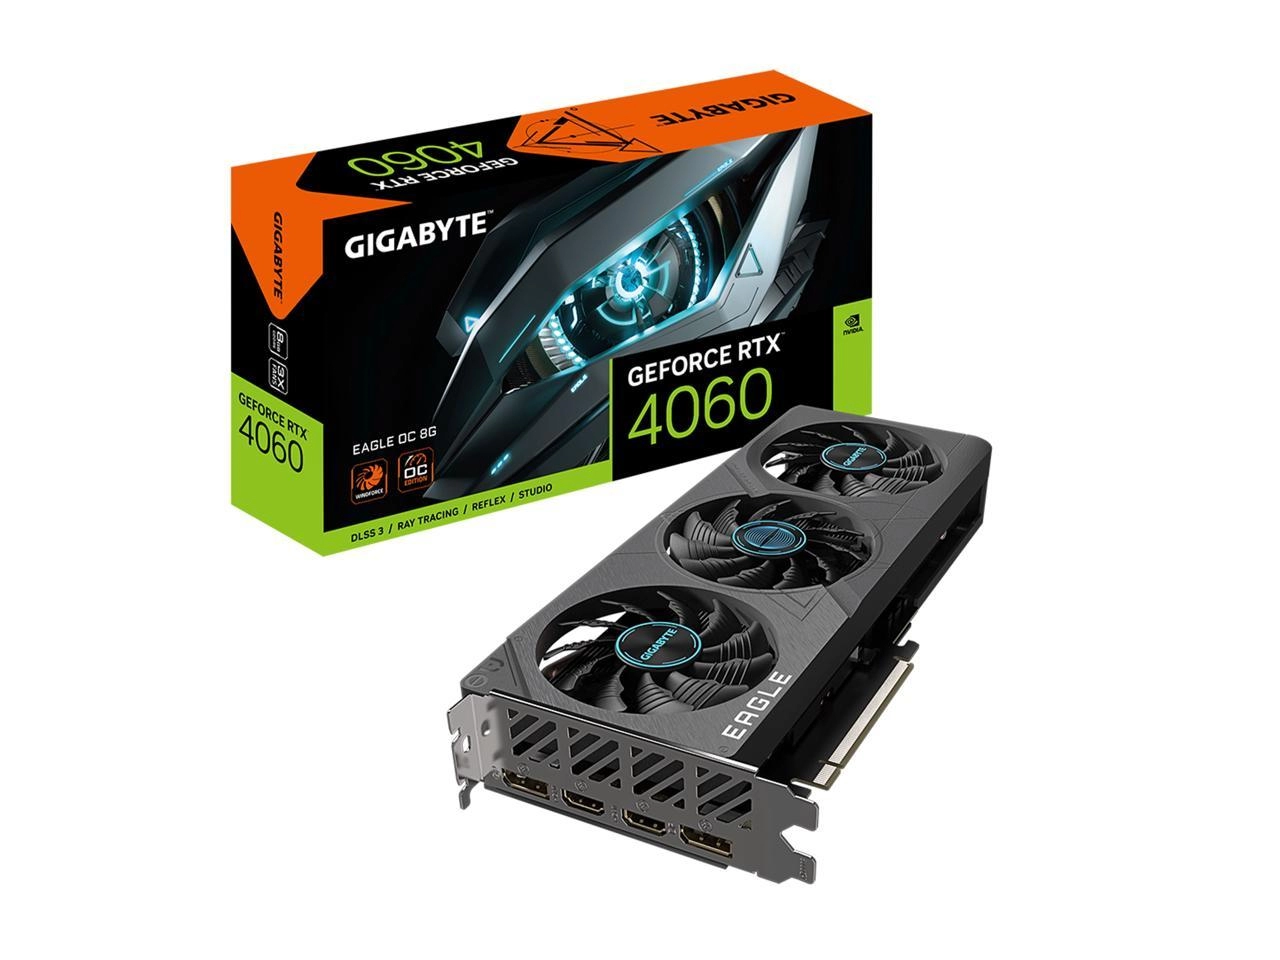 GIGABYTE GeForce RTX 4060 EAGLE OC 8G Package